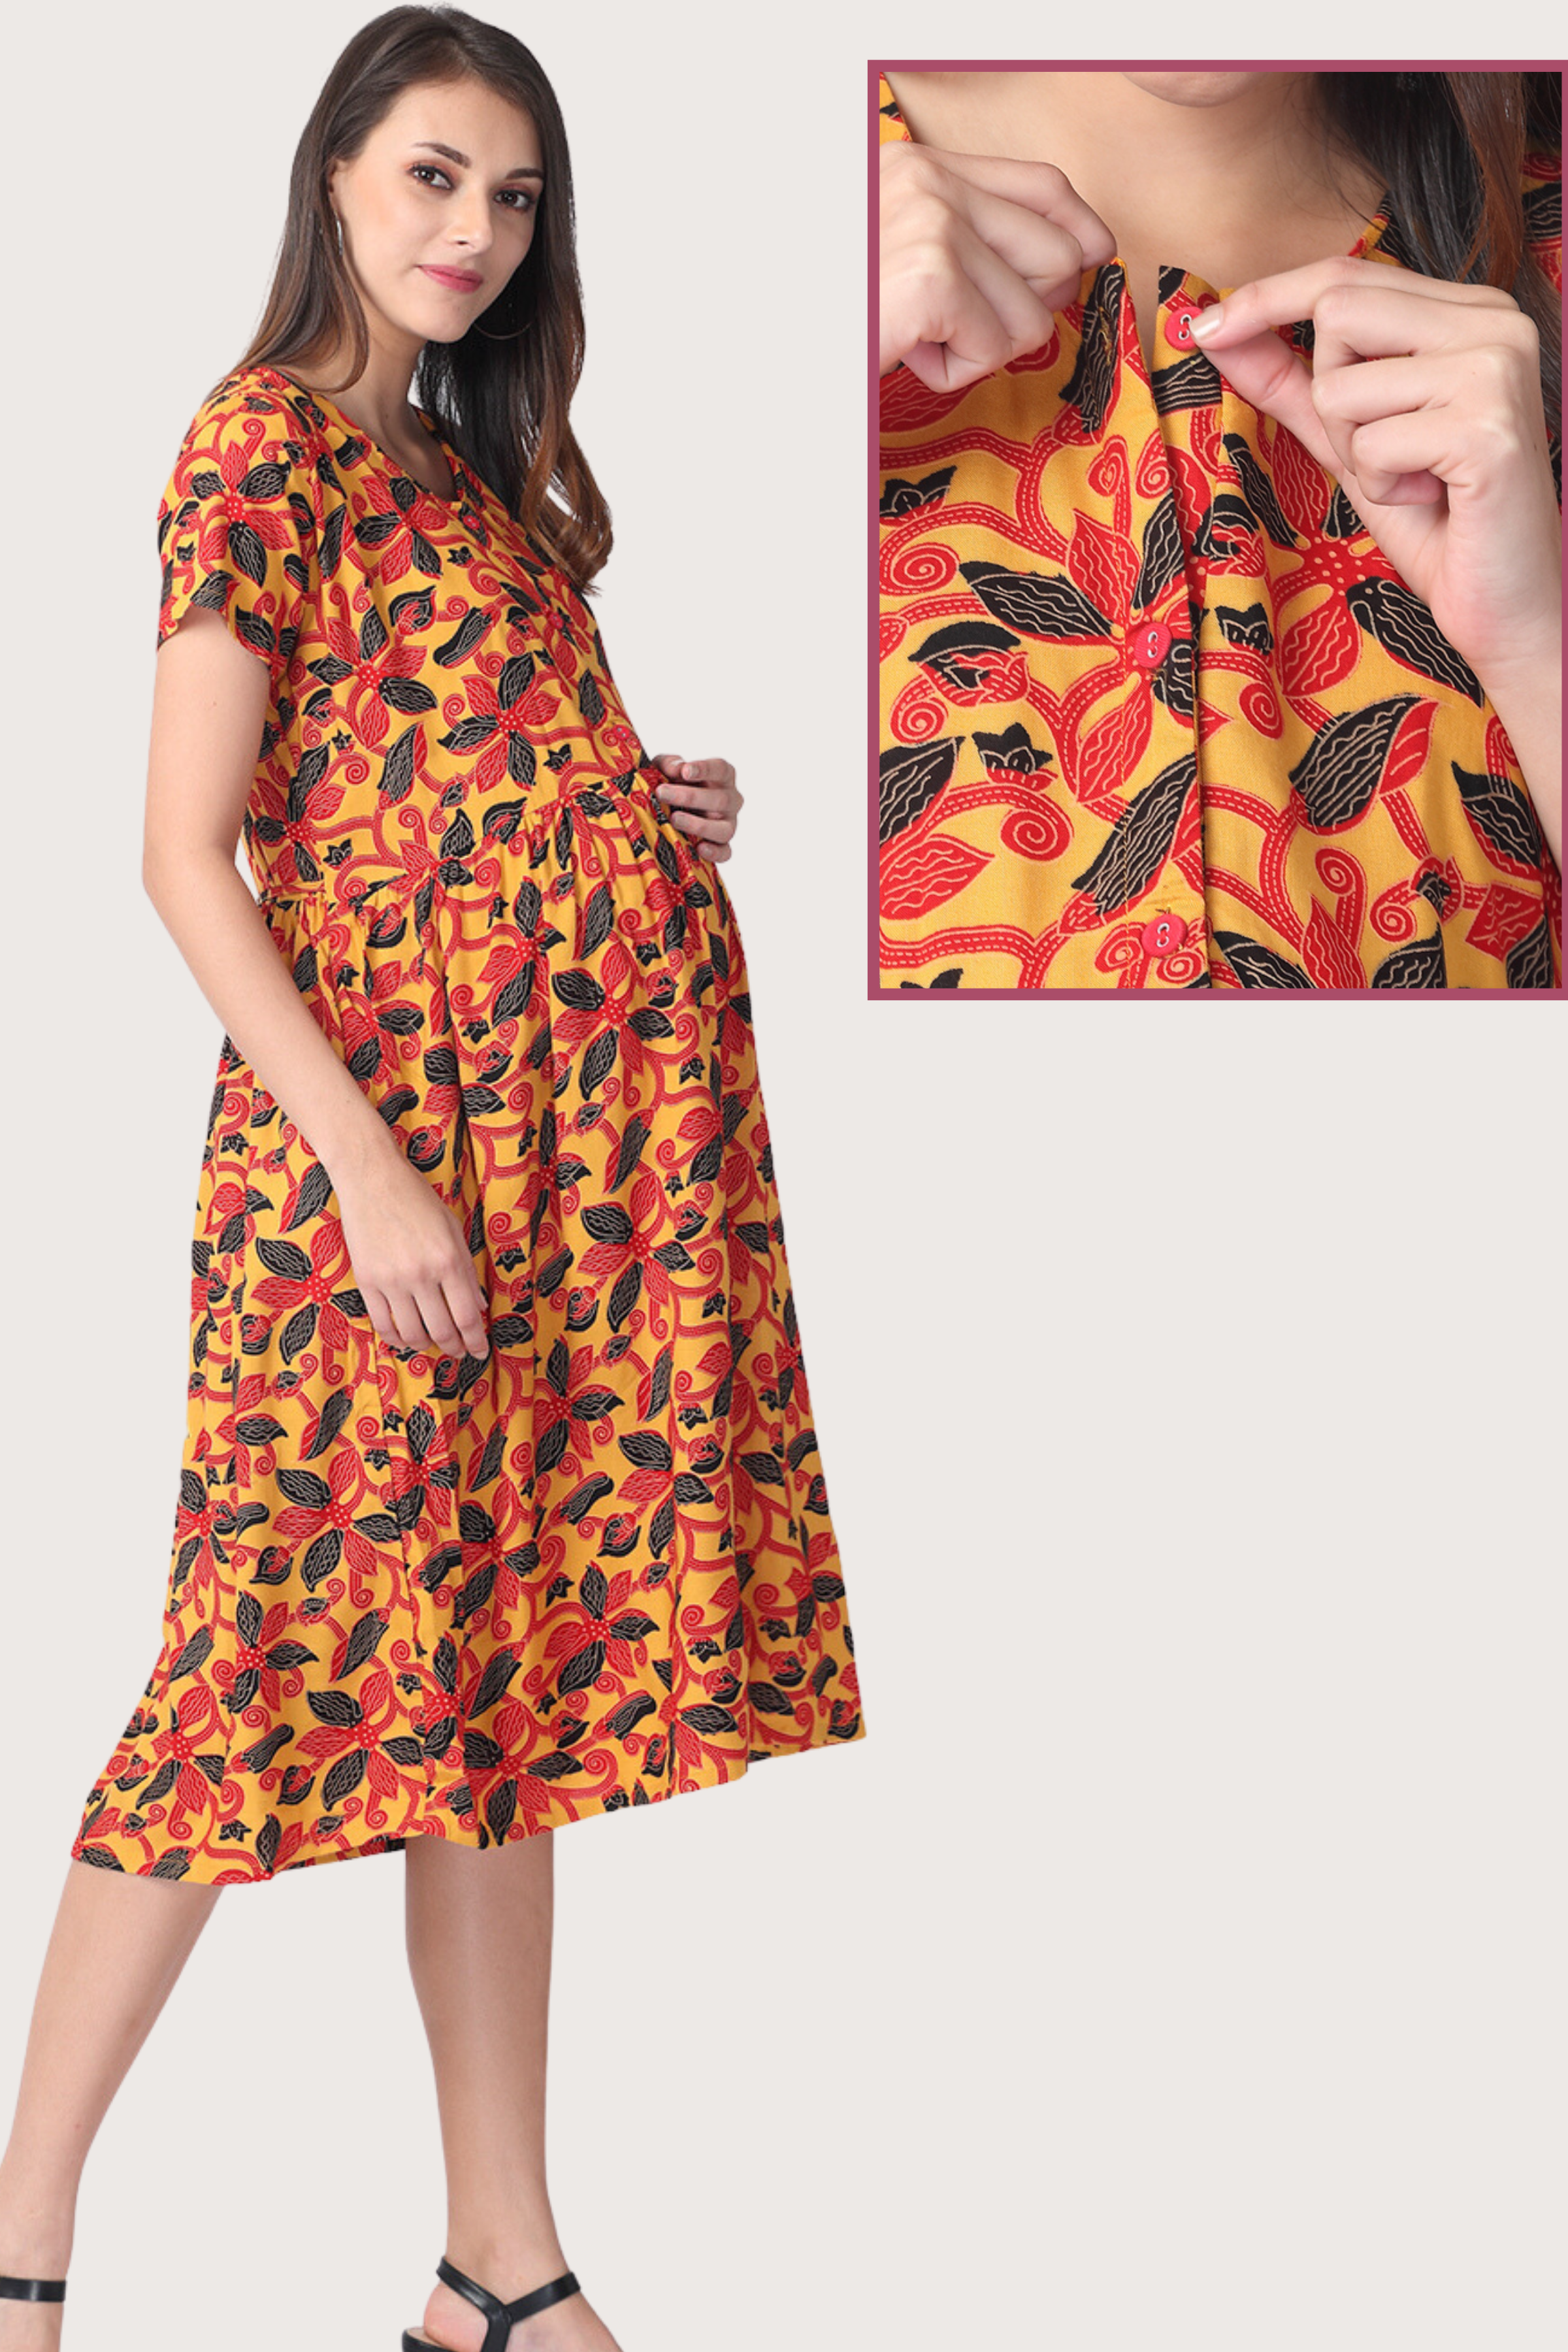 Unbranded Maternity Nursing Dress Summer Half Sleeve Clothes India | Ubuy